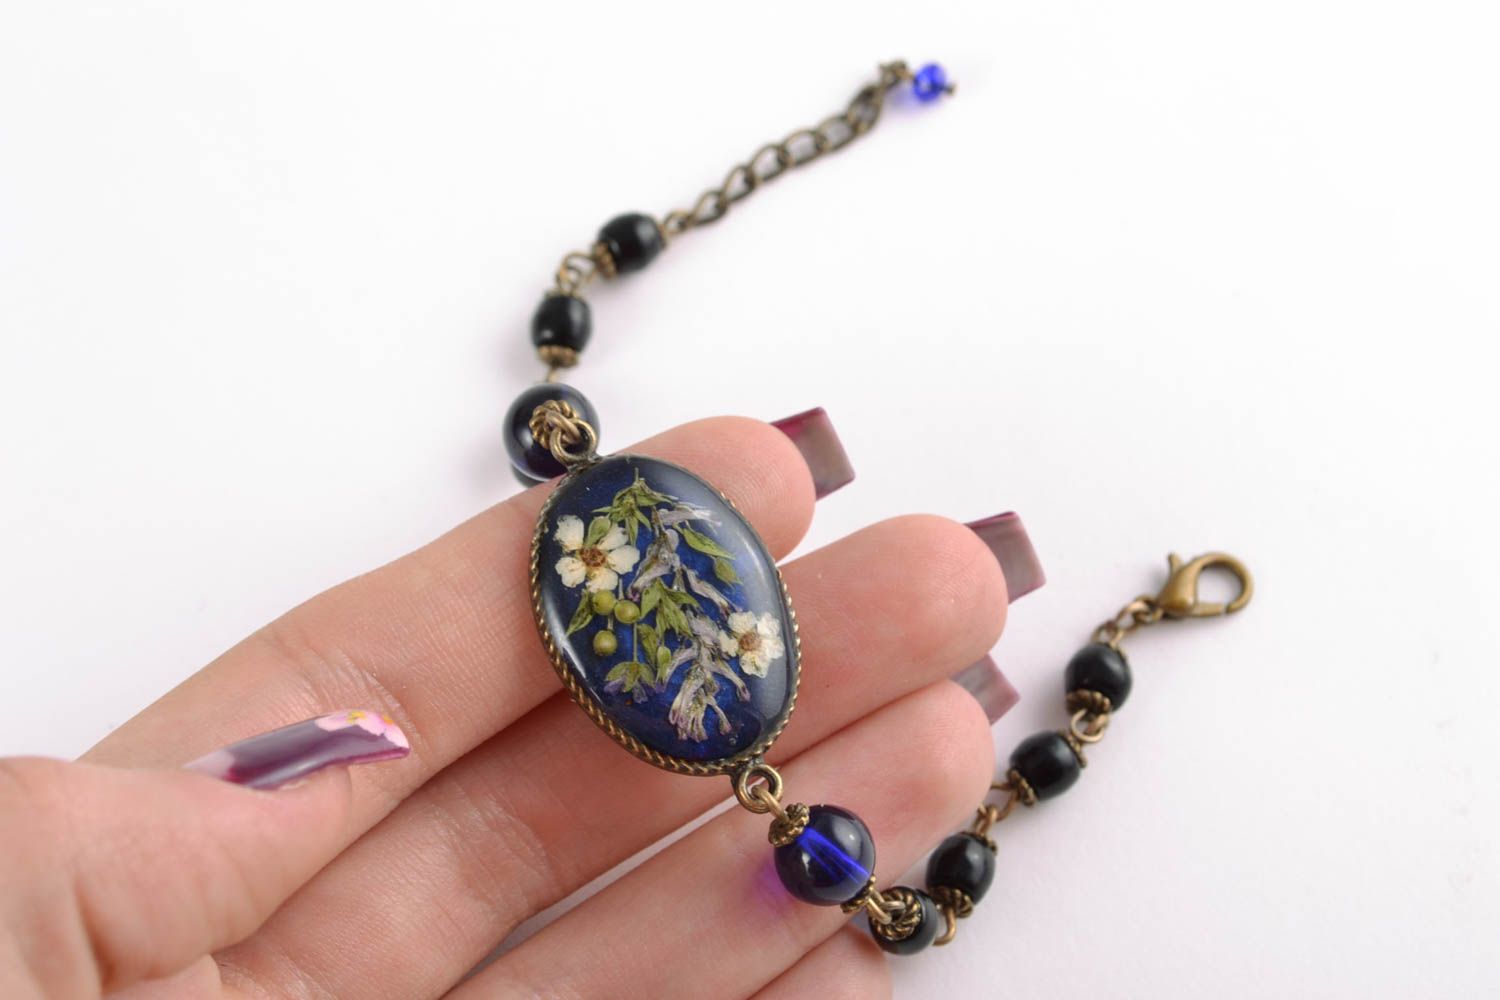 Wrist bracelet with dried flowers and epoxy resin photo 1